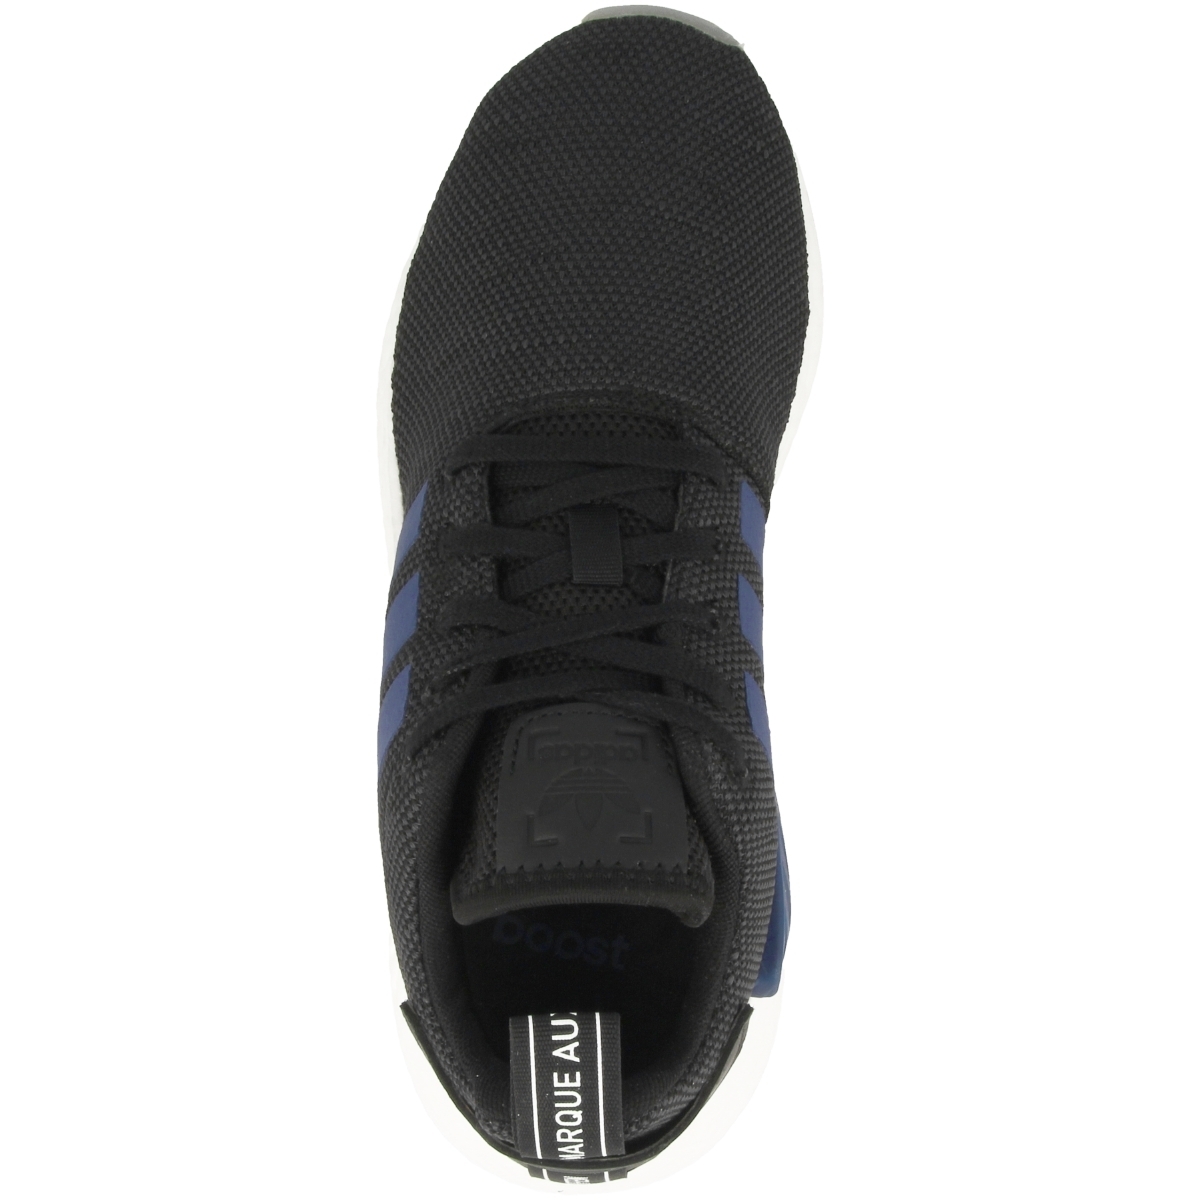 Adidas NMD_R2 Women Schuhe schwarz